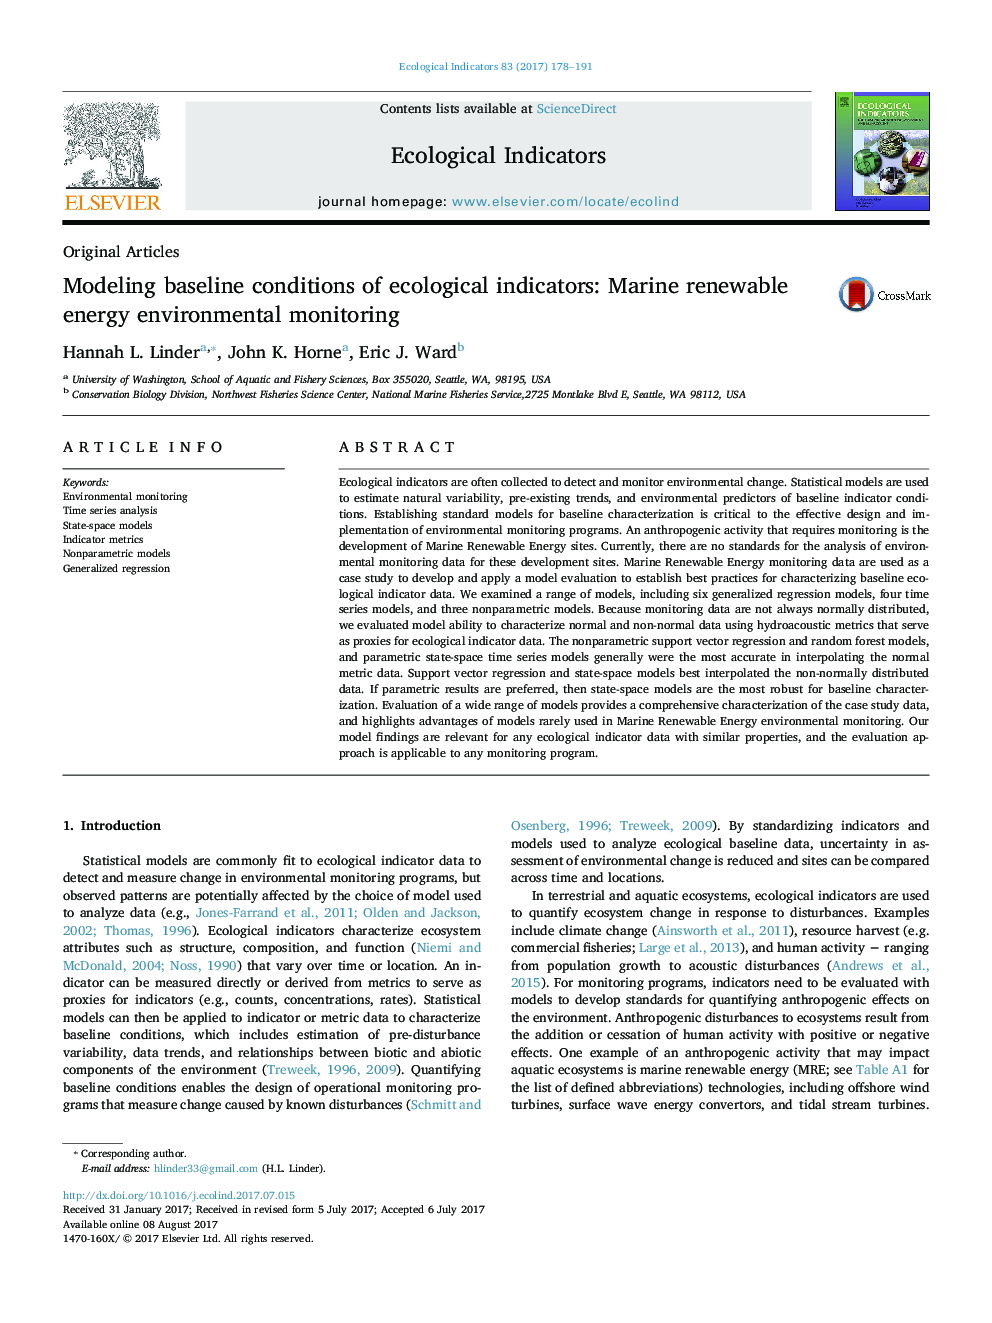 Original ArticlesModeling baseline conditions of ecological indicators: Marine renewable energy environmental monitoring